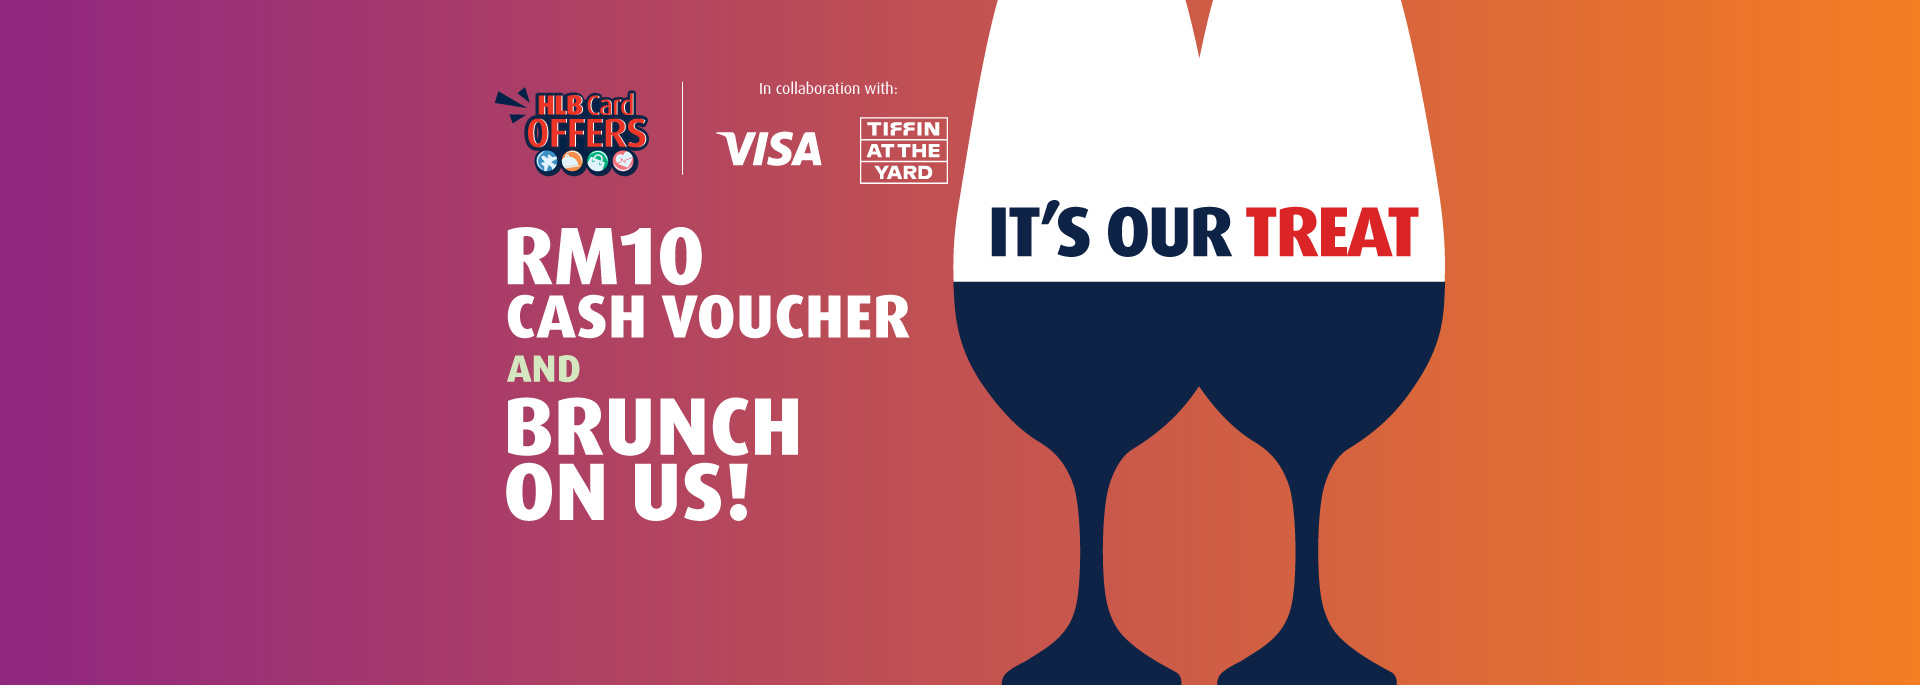 RM10 Cash voucher and brunch on us!